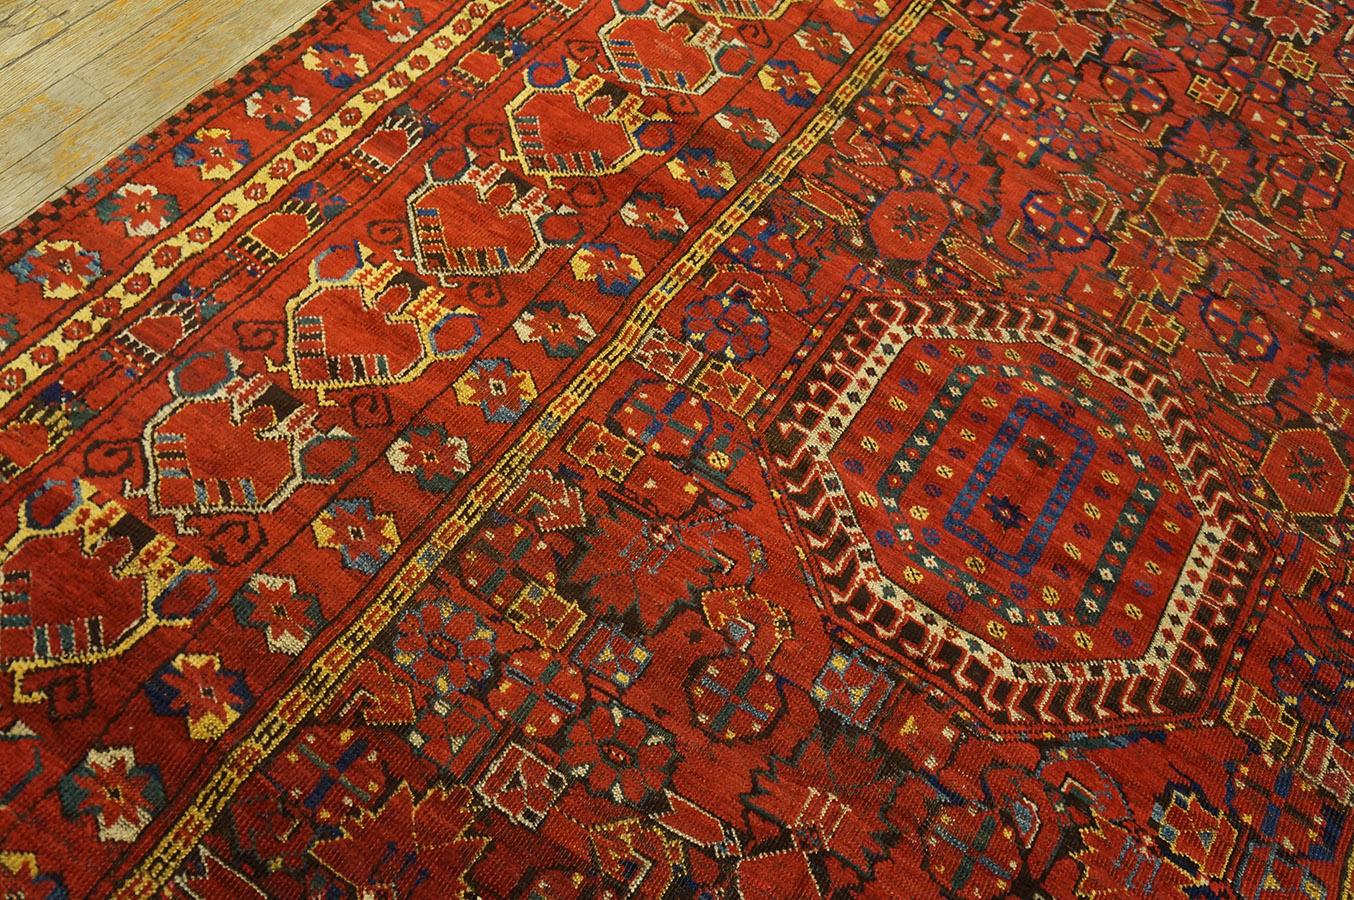 19th Century Central Asian Ersari-Beshir Gallery Carpet (6'6